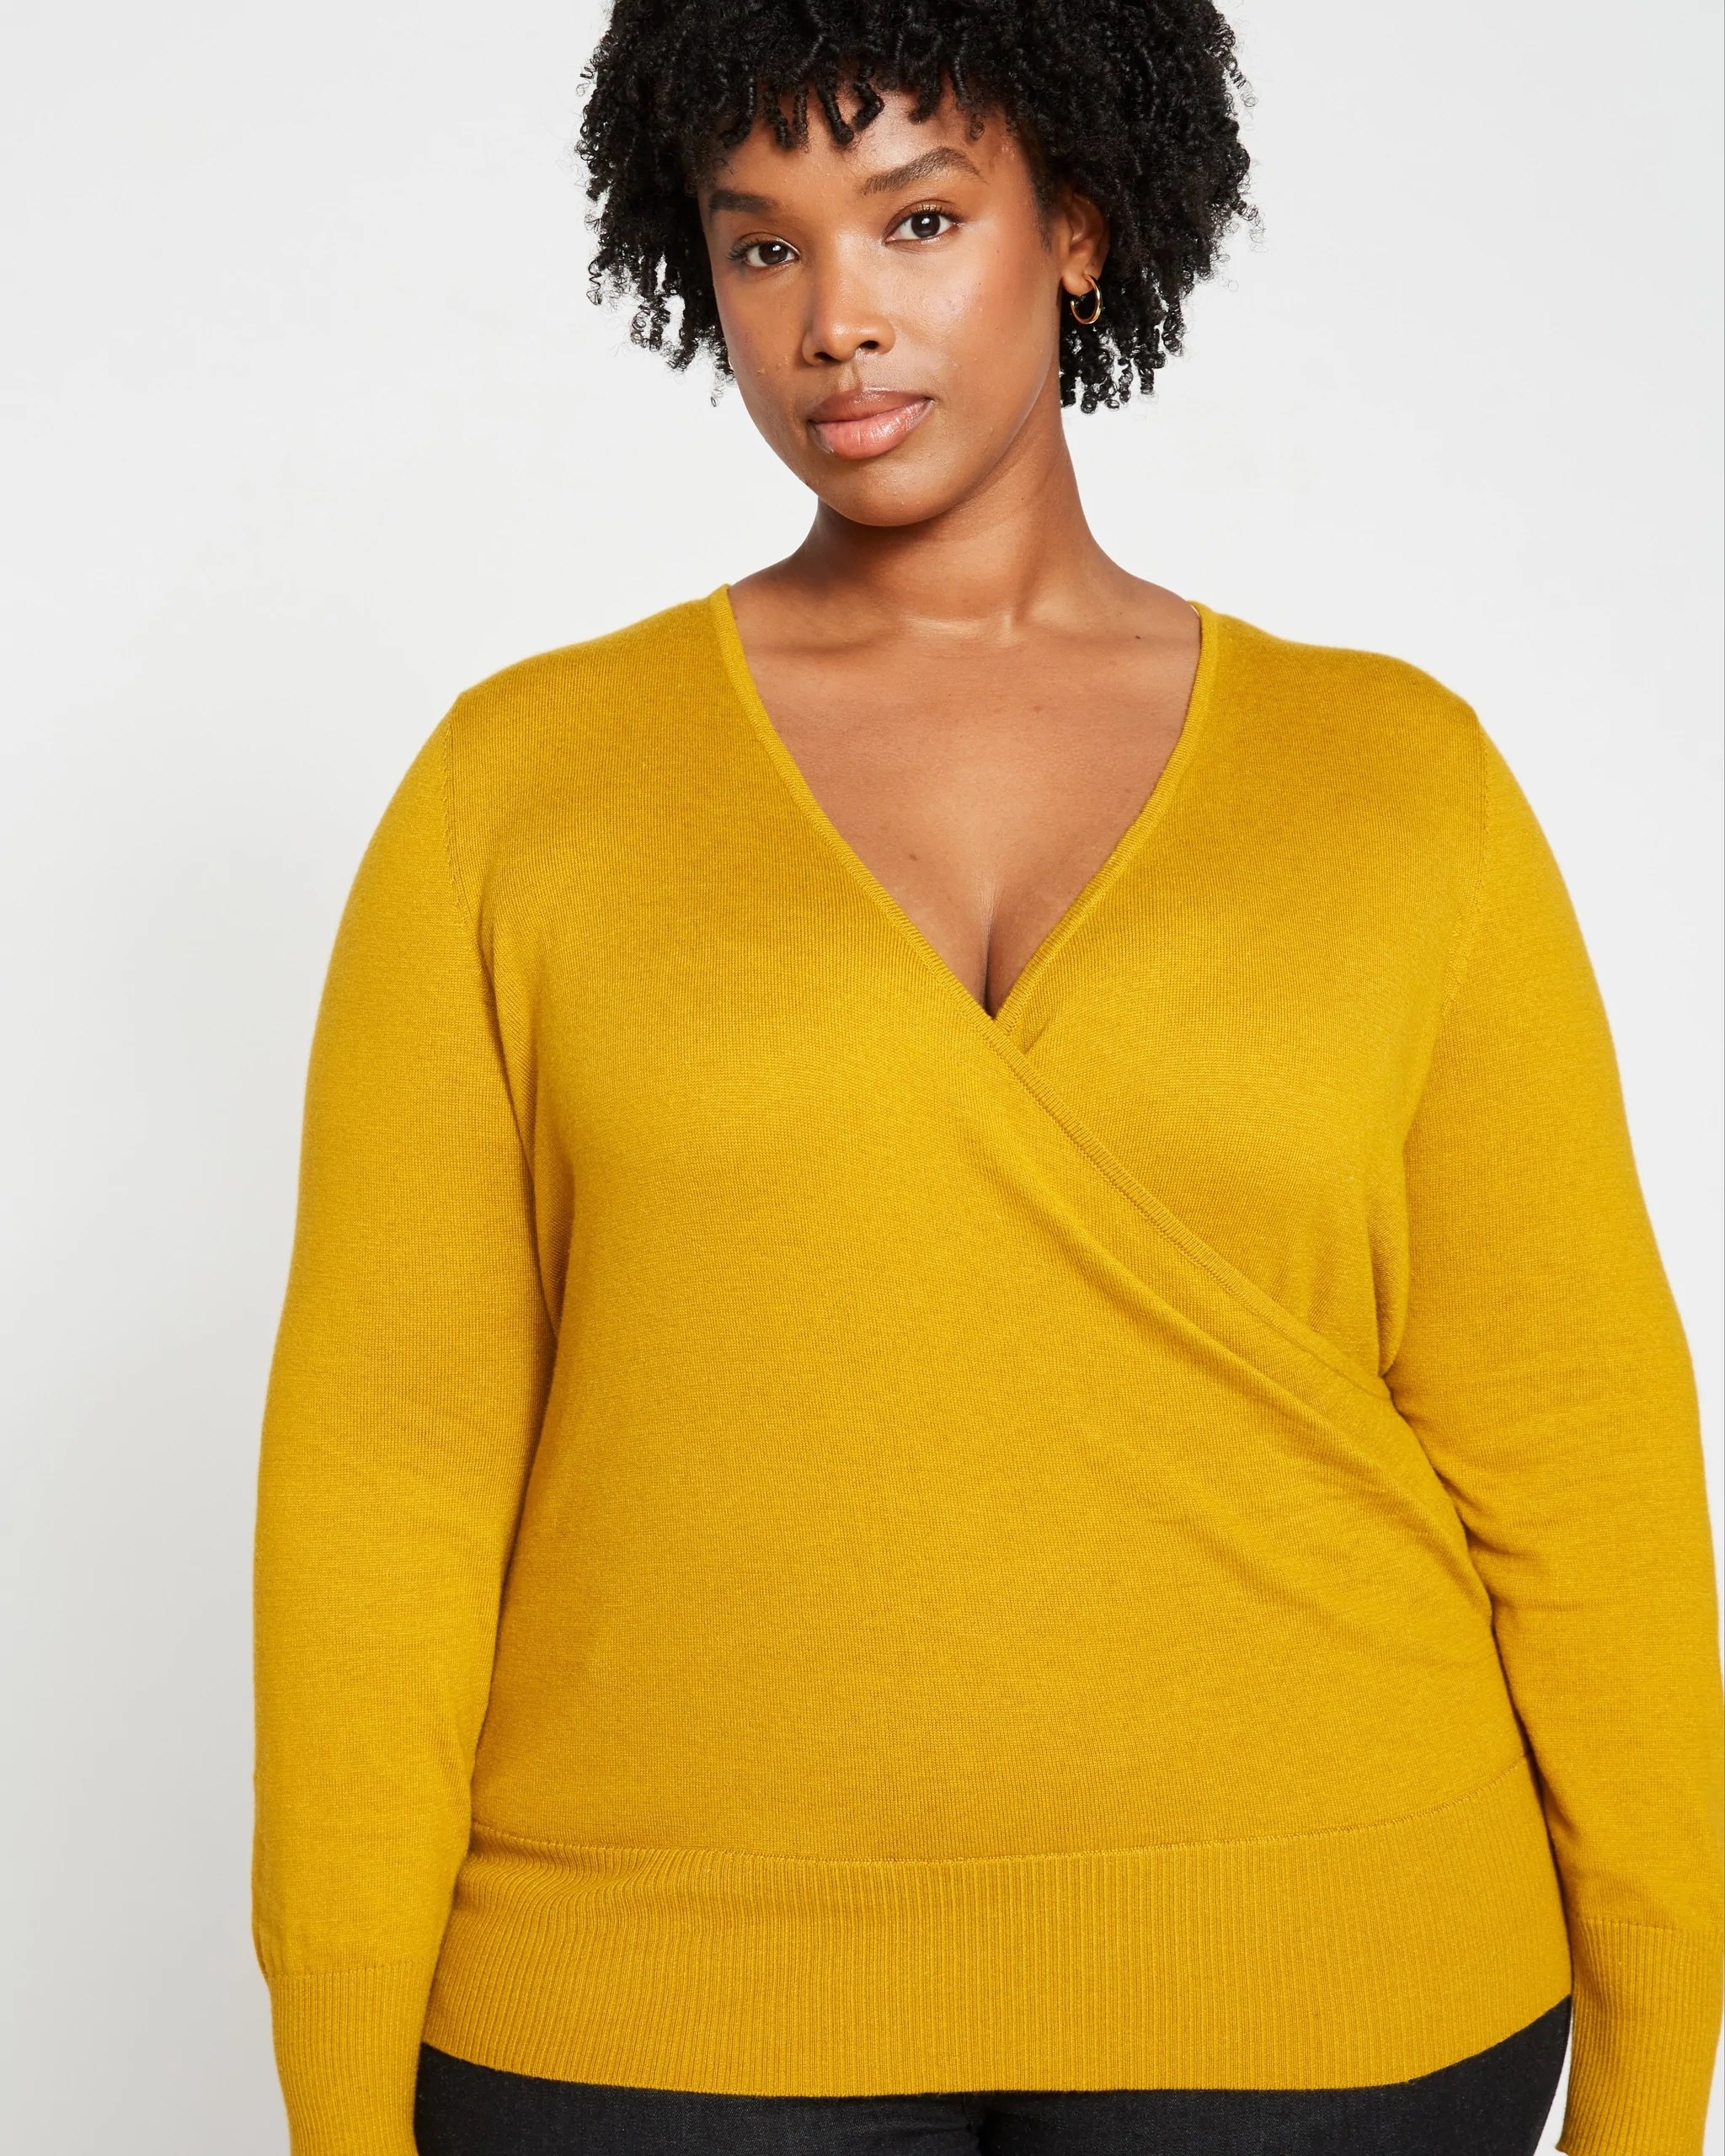 model in yellow wrap sweater